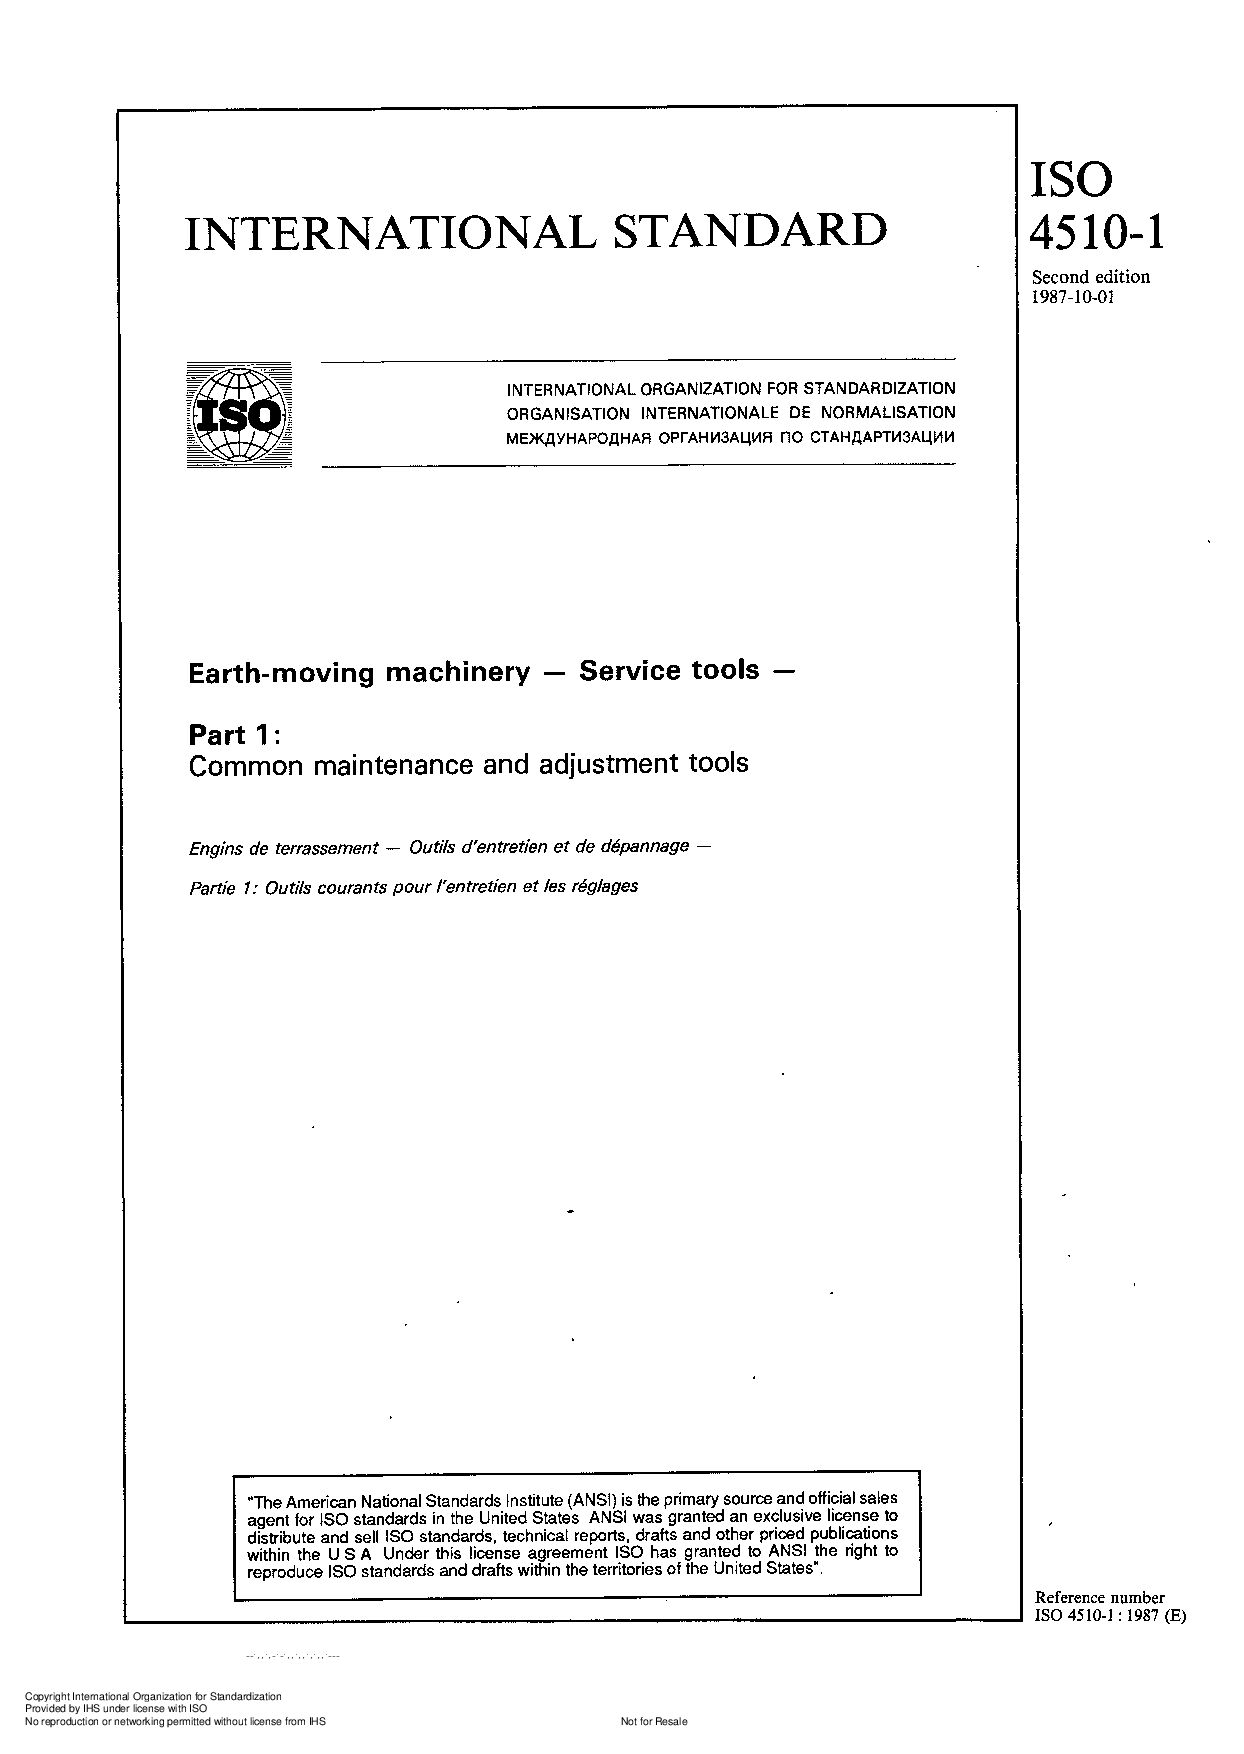 ISO 4510-1:1987封面图